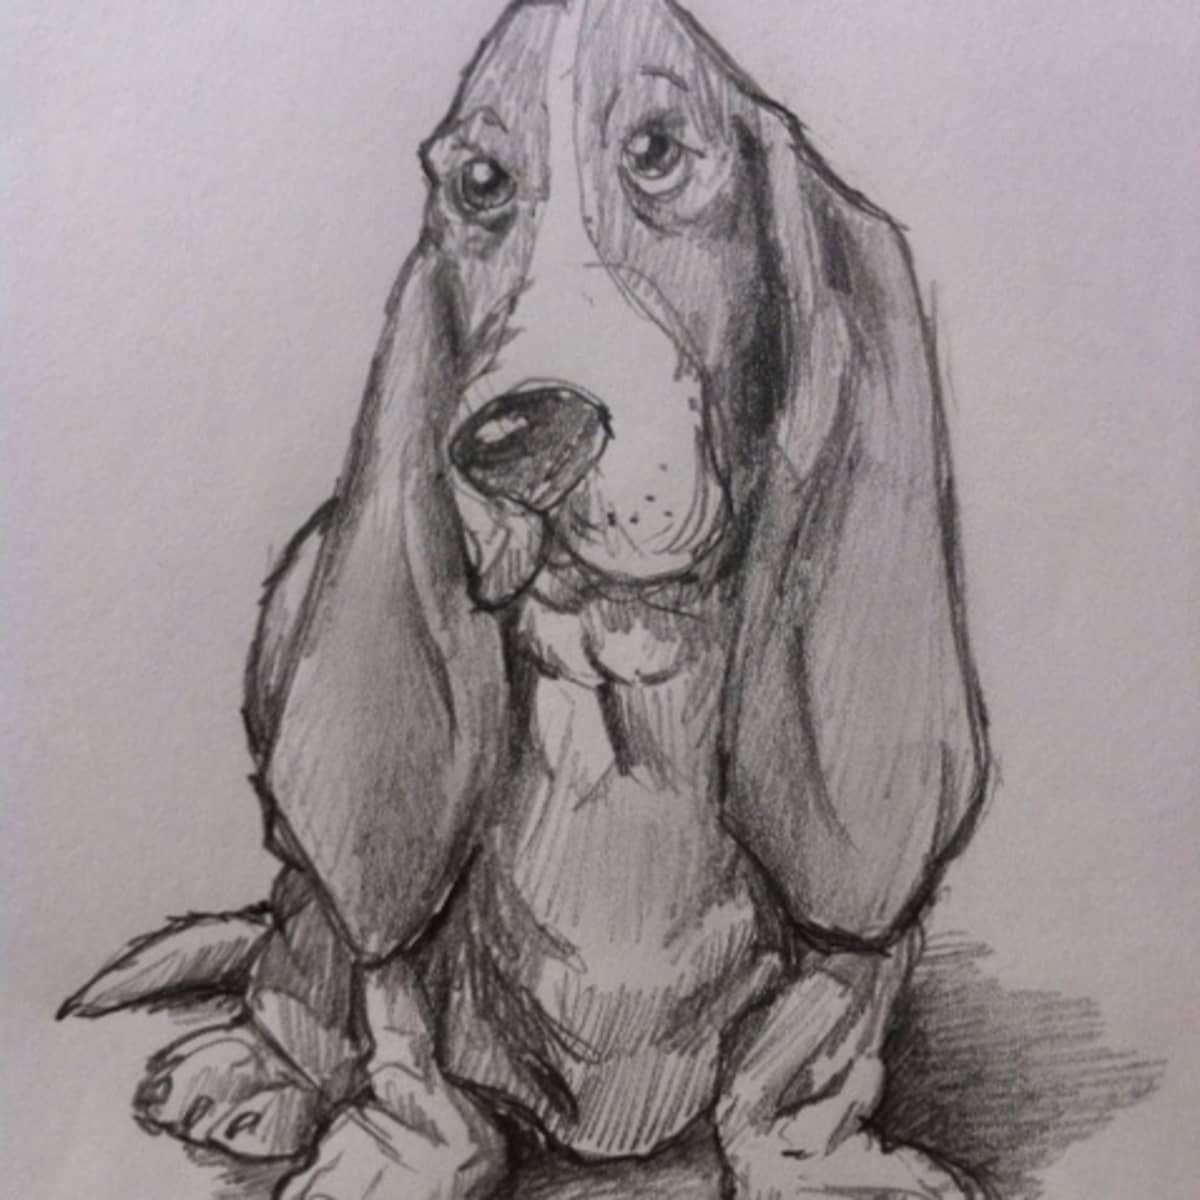 How to Draw a Basset Hound Dog - FeltMagnet